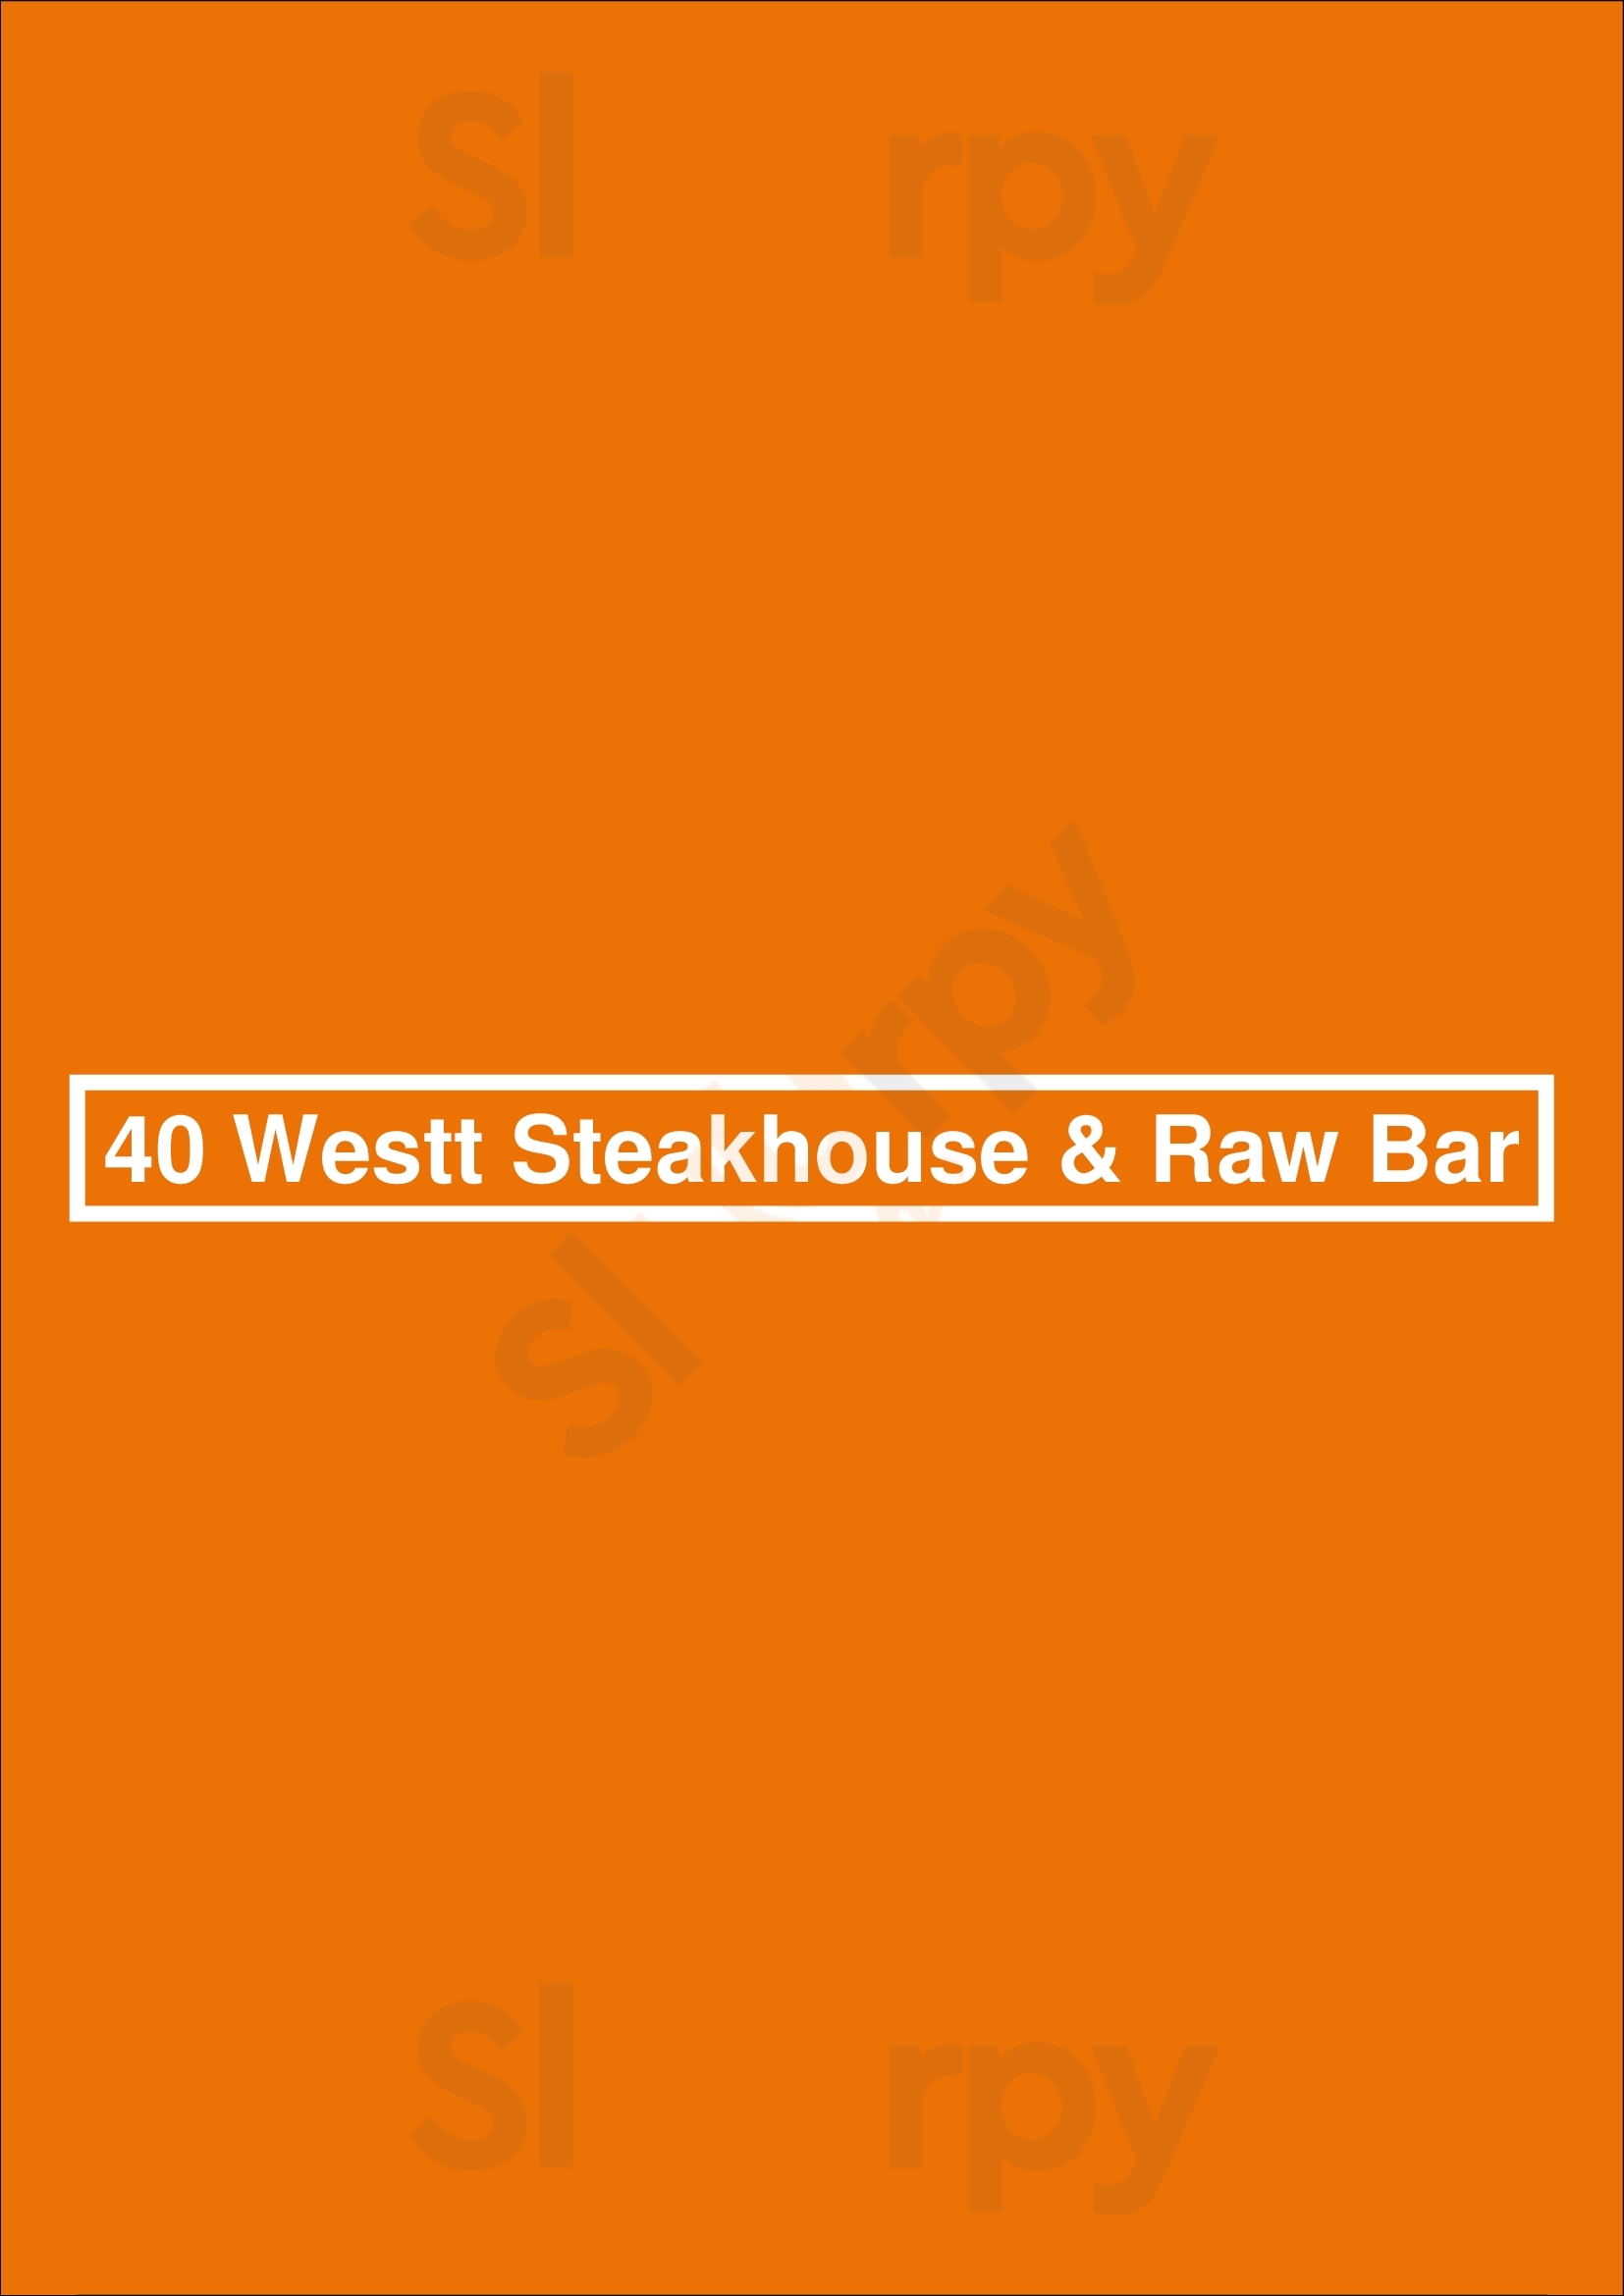 40 Westt Steakhouse & Raw Bar Pointe Claire Menu - 1